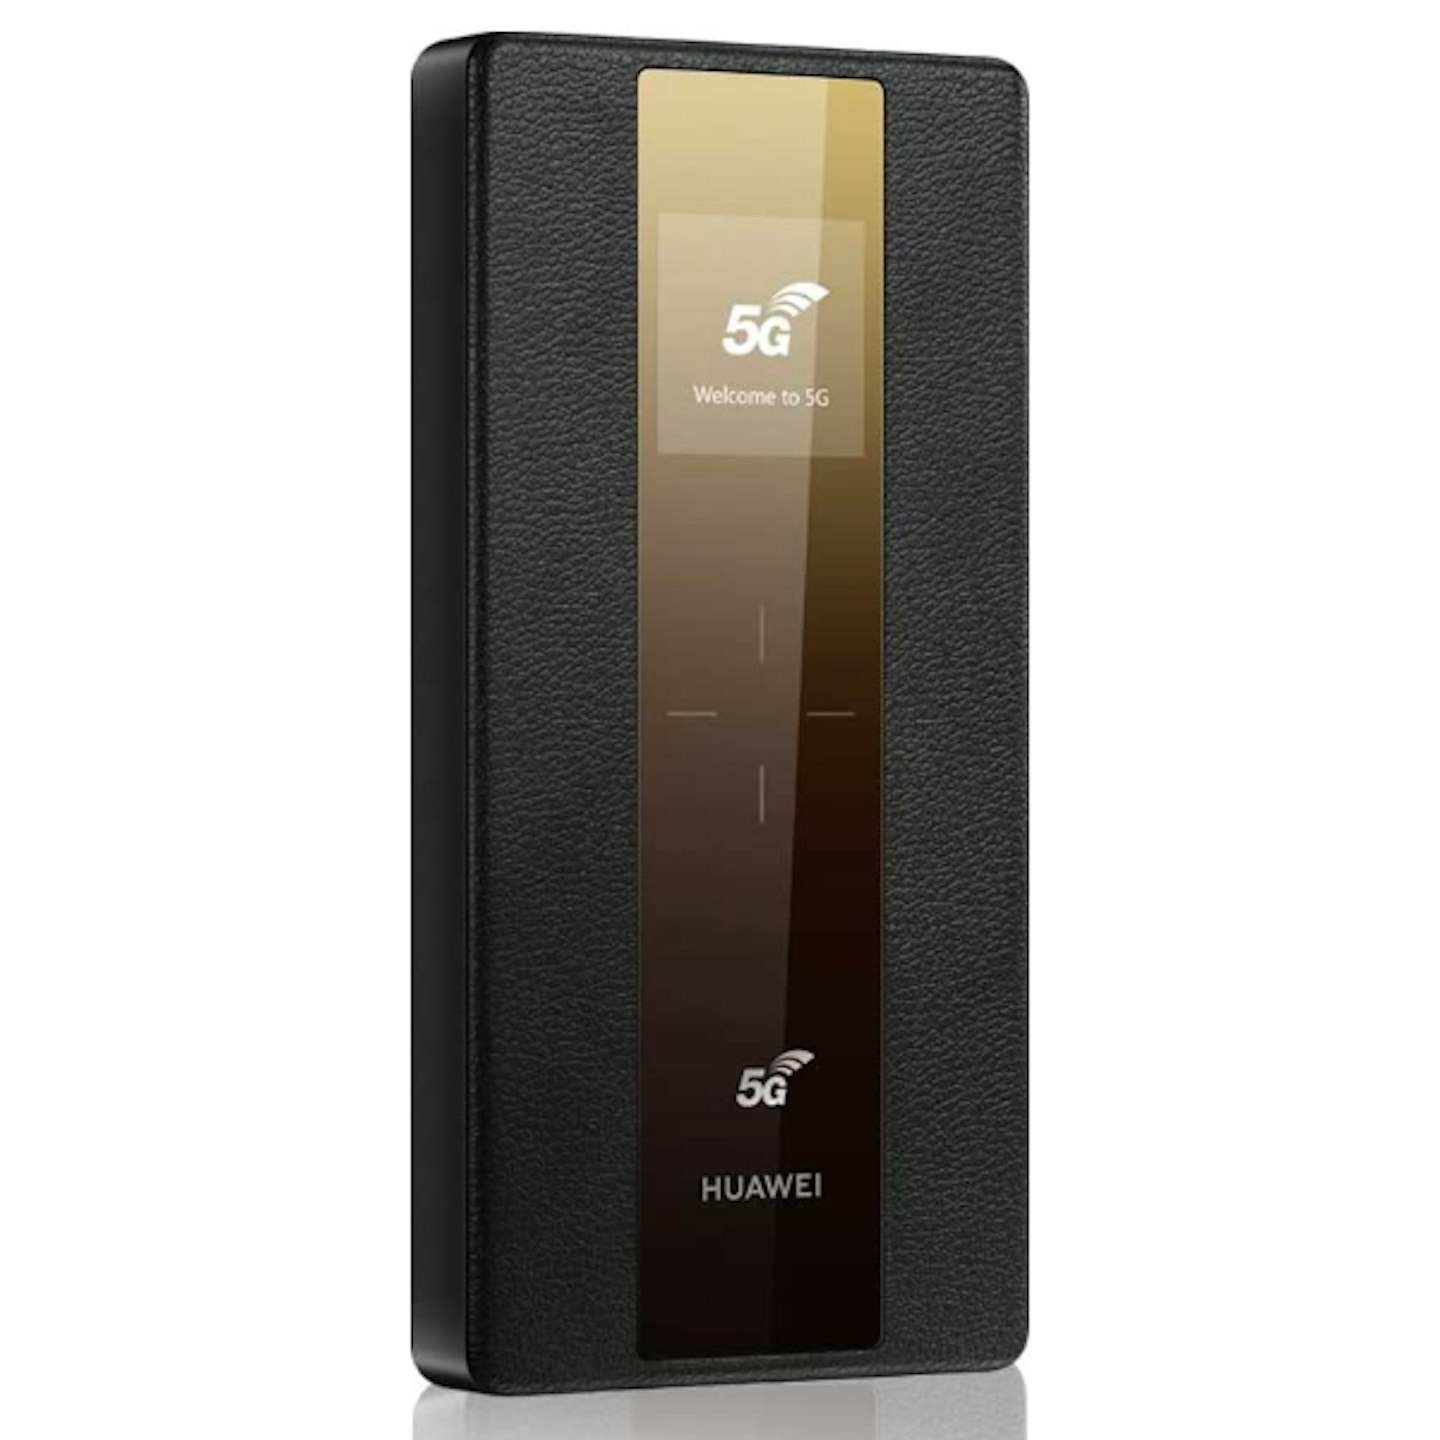 Huawei E6878-370 5G Portable Wi-Fi Pro